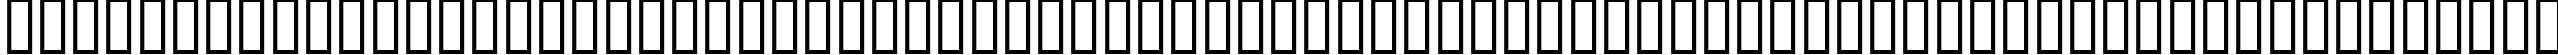 Пример написания английского алфавита шрифтом DF Calligraphic Ornaments LET